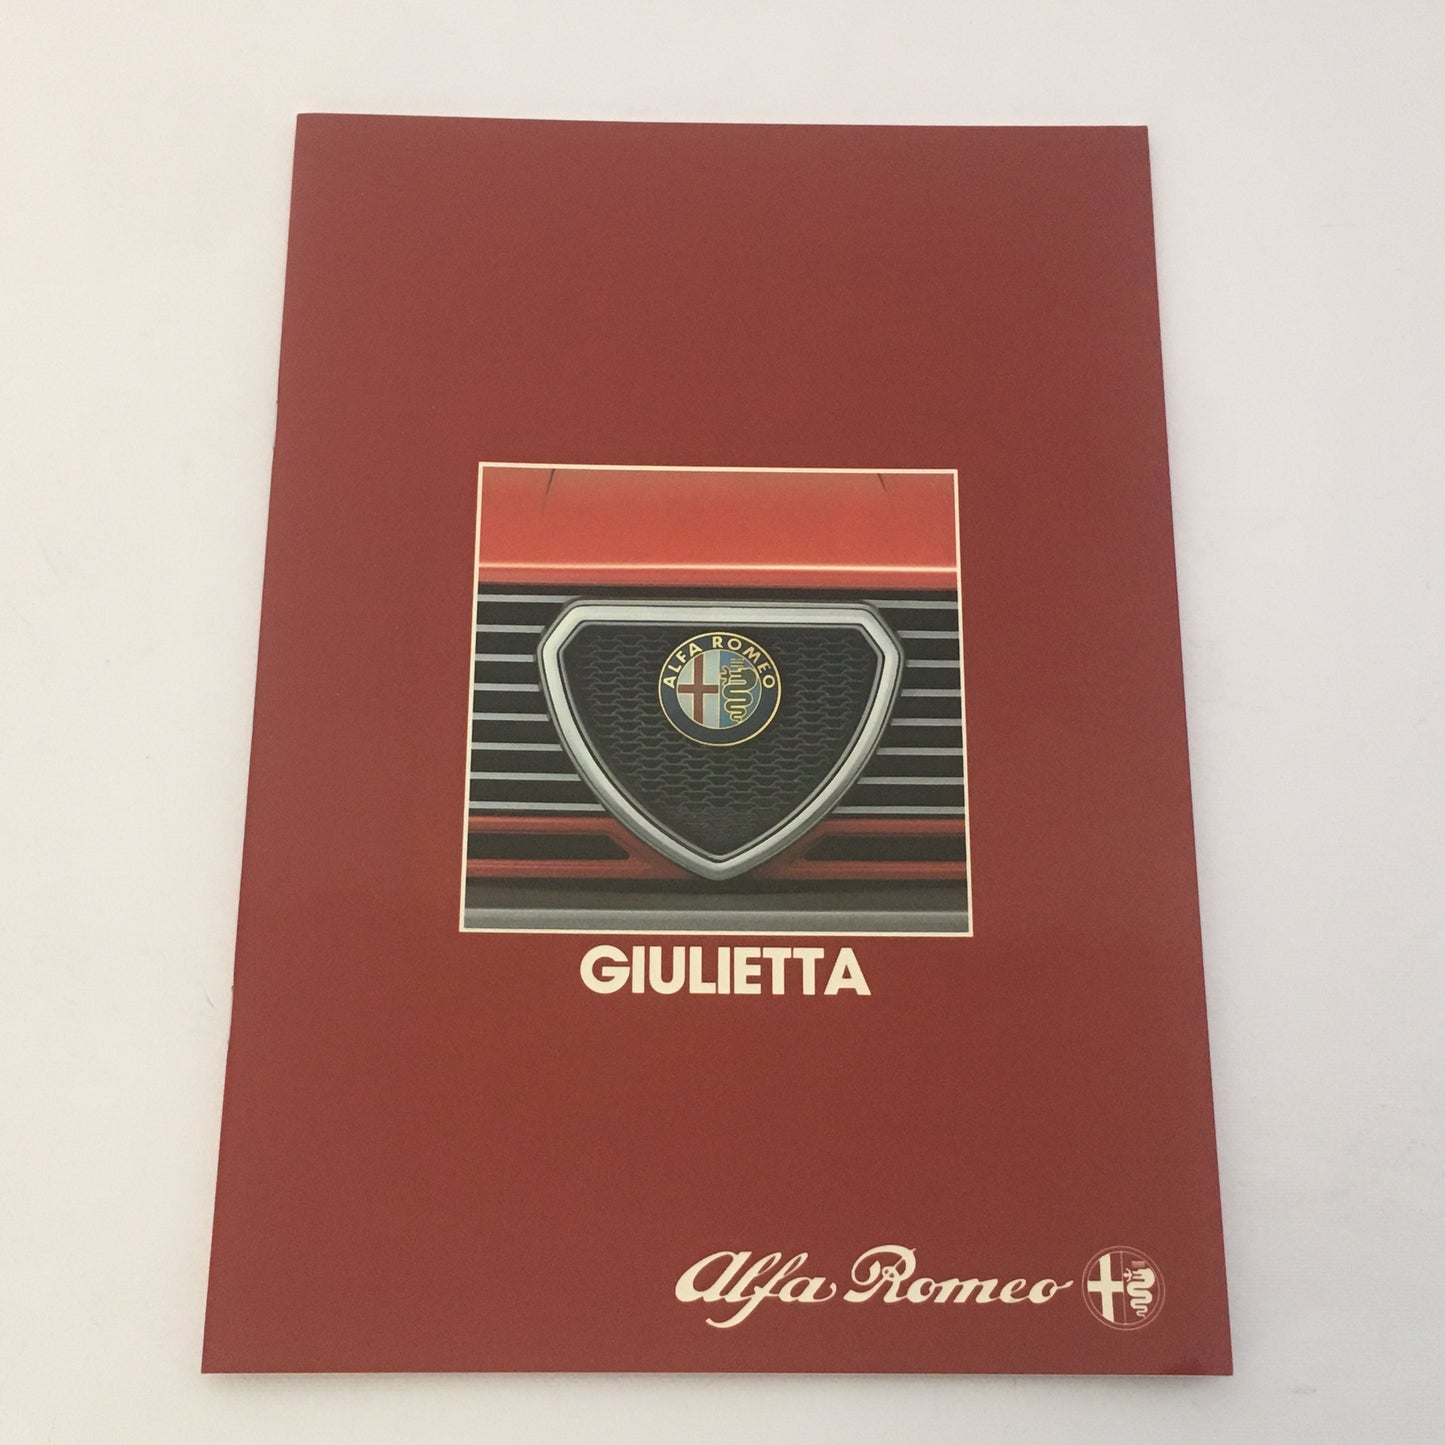 Alfa Romeo, Brochure Poster Giulietta 2.0, New Giulietta, 70s 80s, English Language